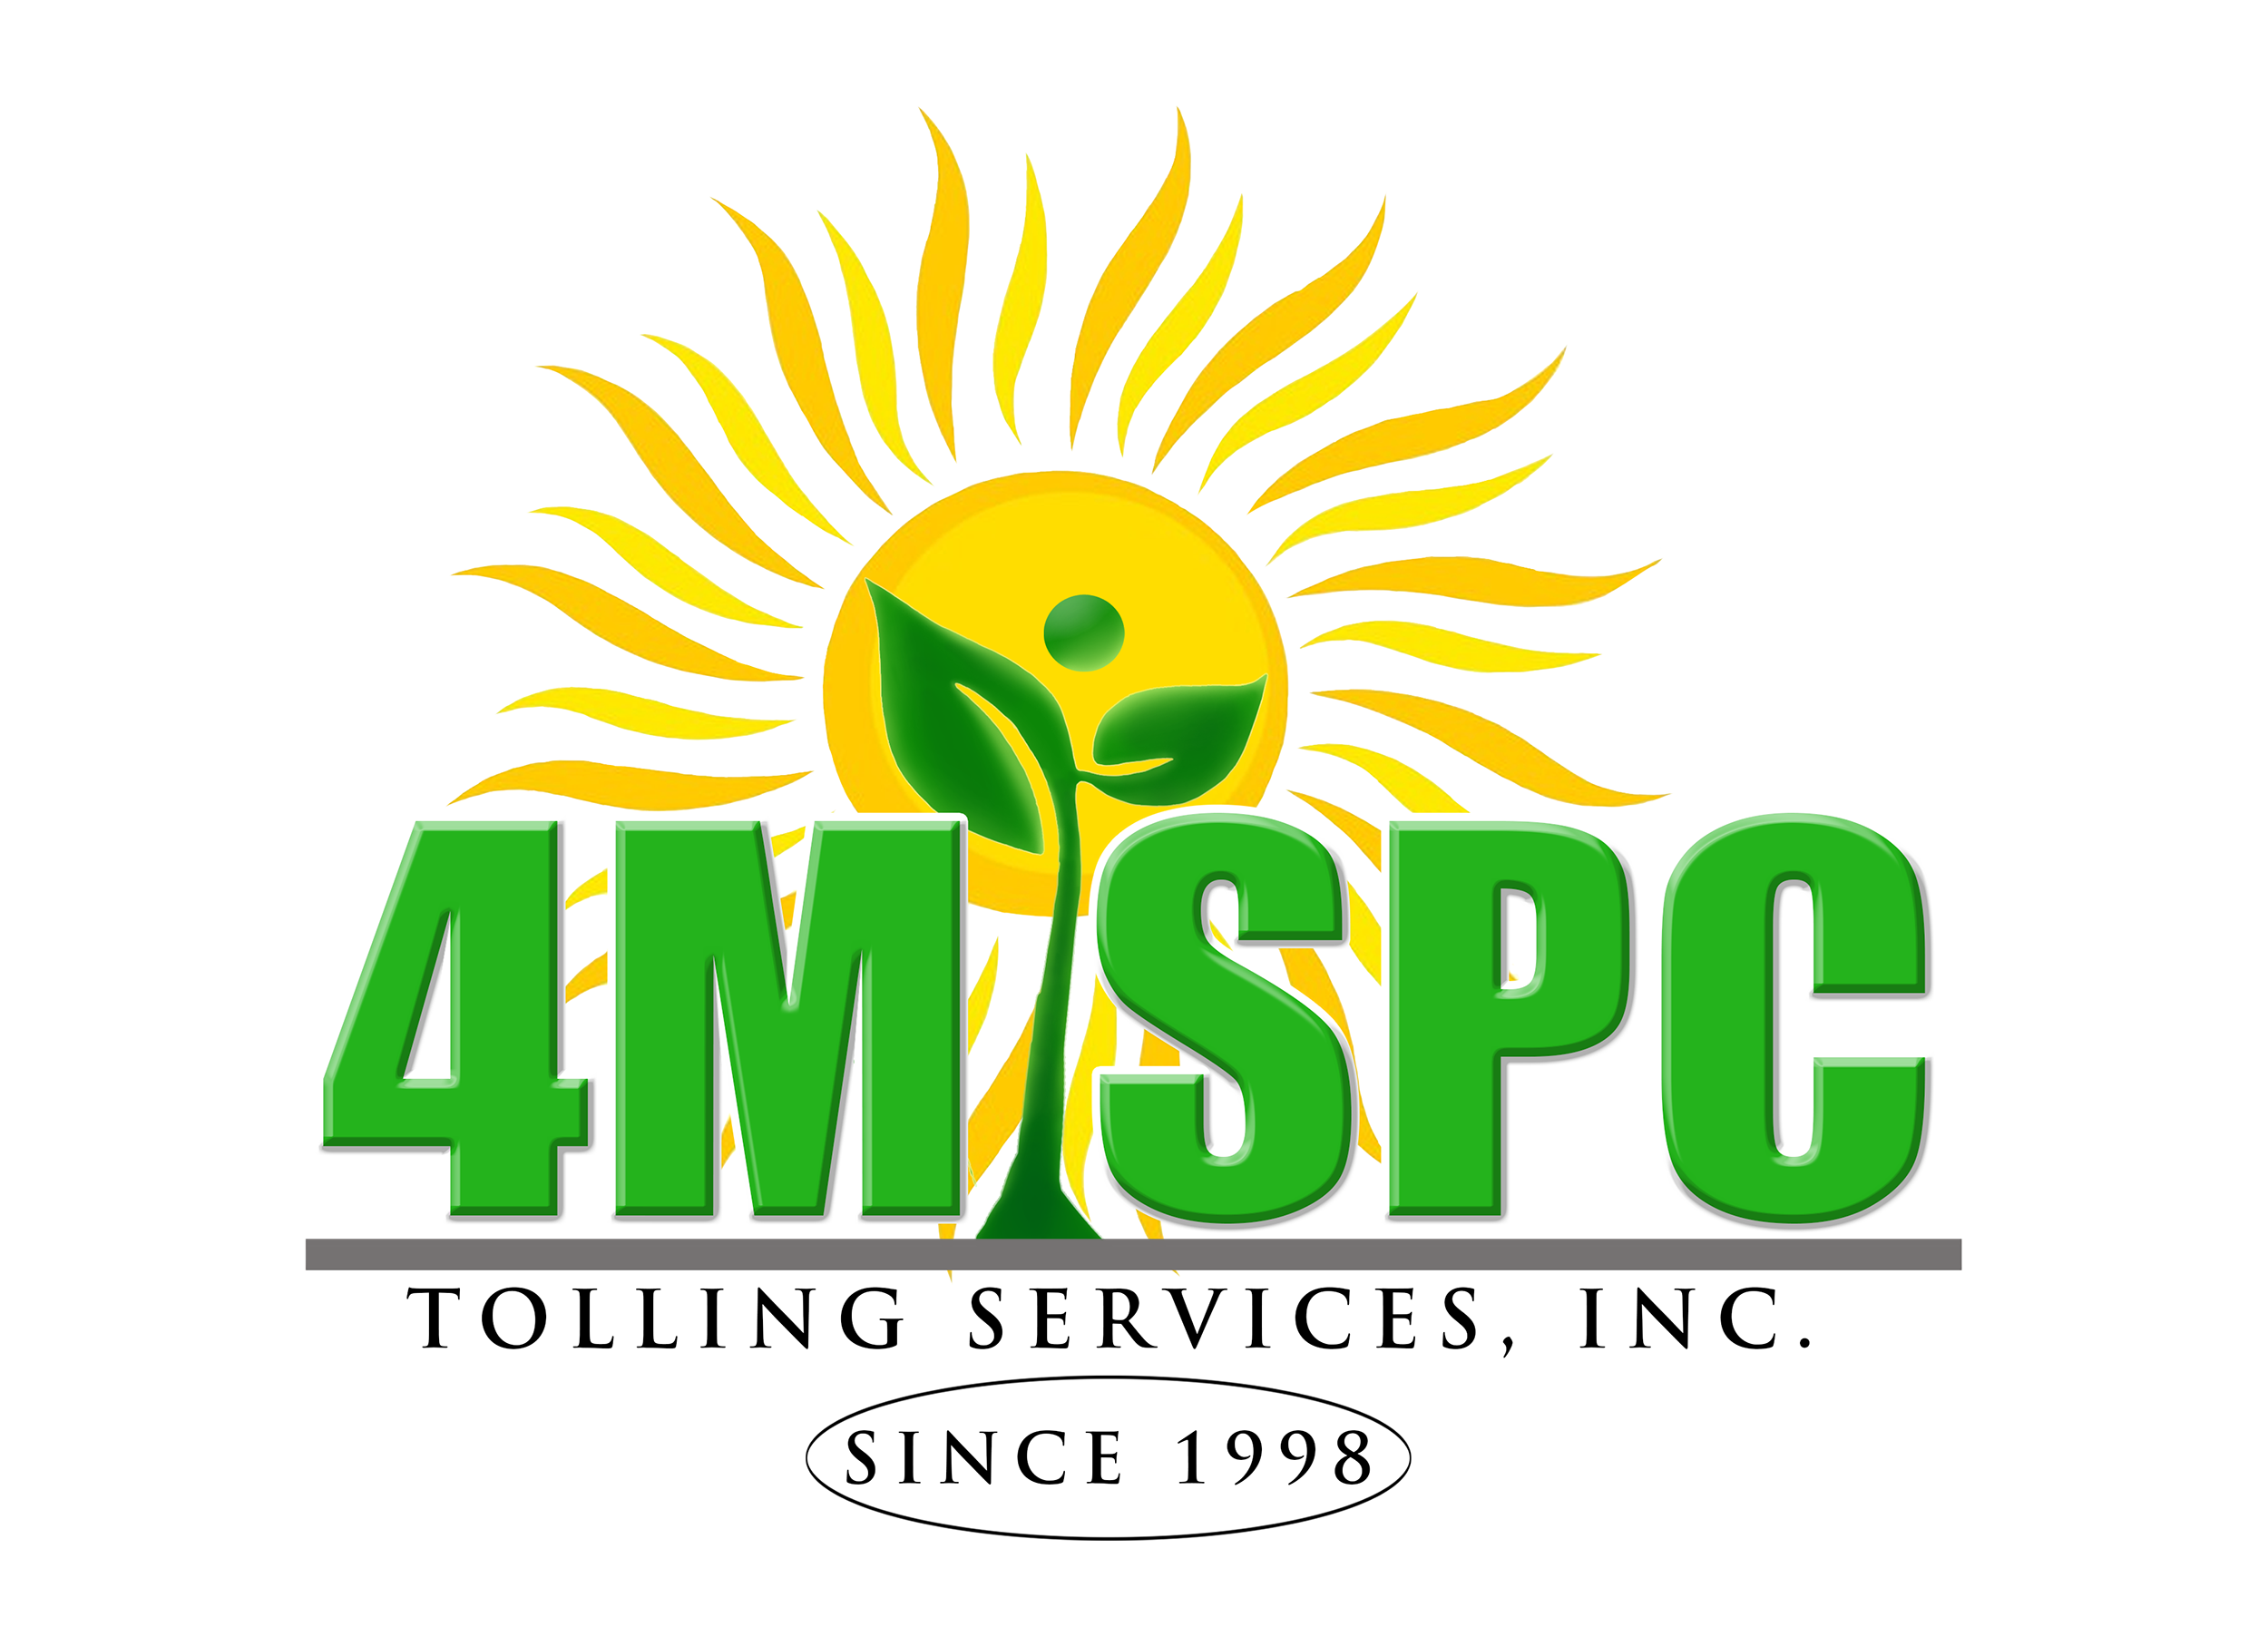 4M SPC Tolling Services, Inc.